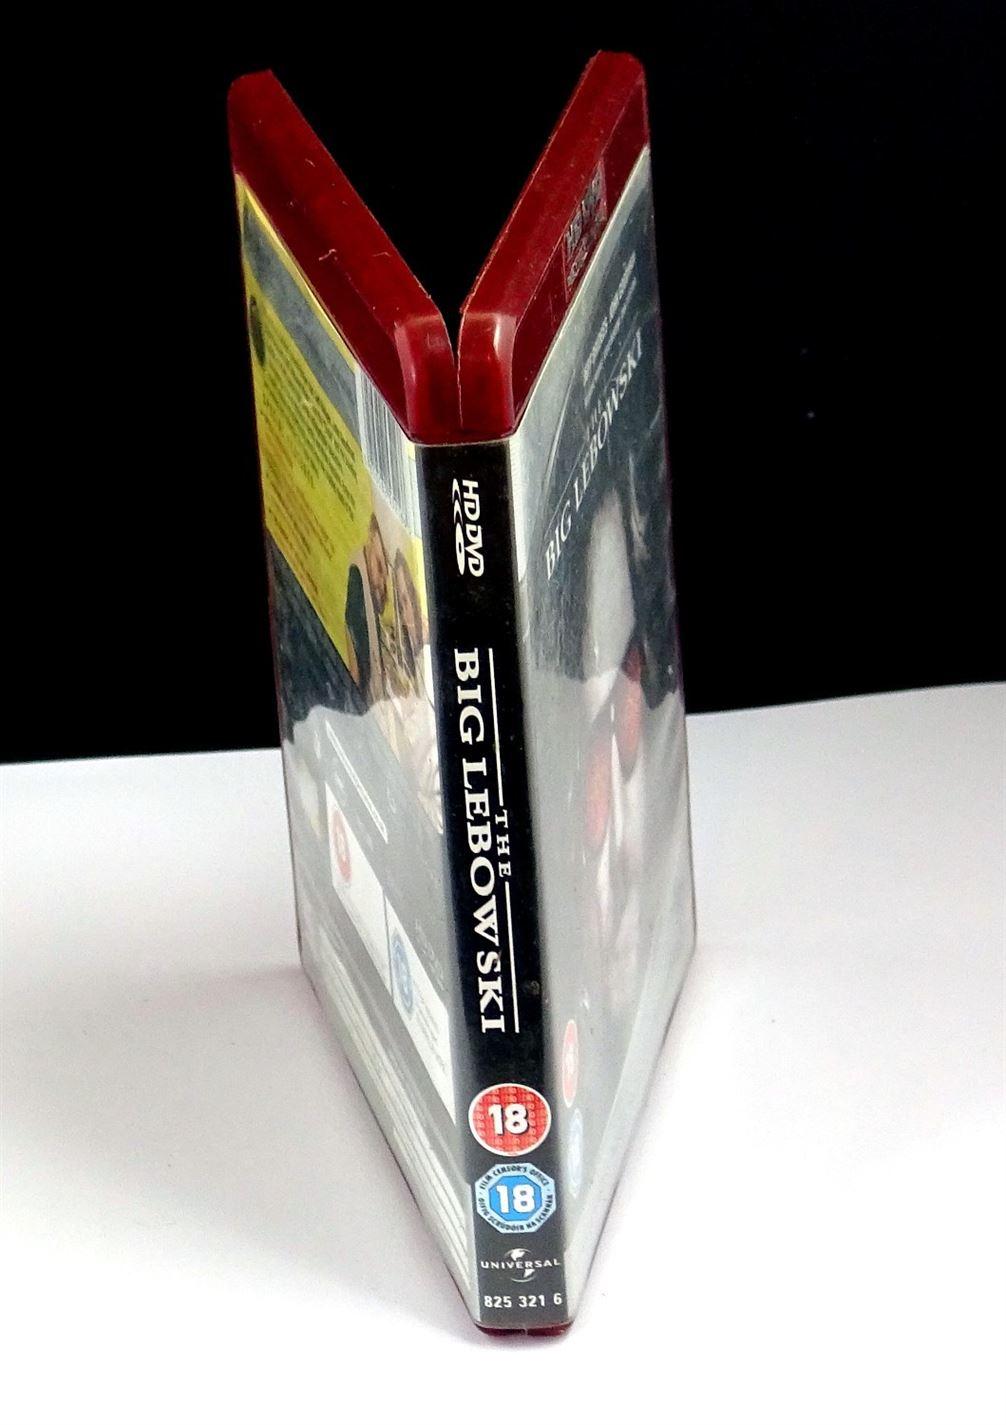 The Big Lebowski (HD DVD) - UK Seller